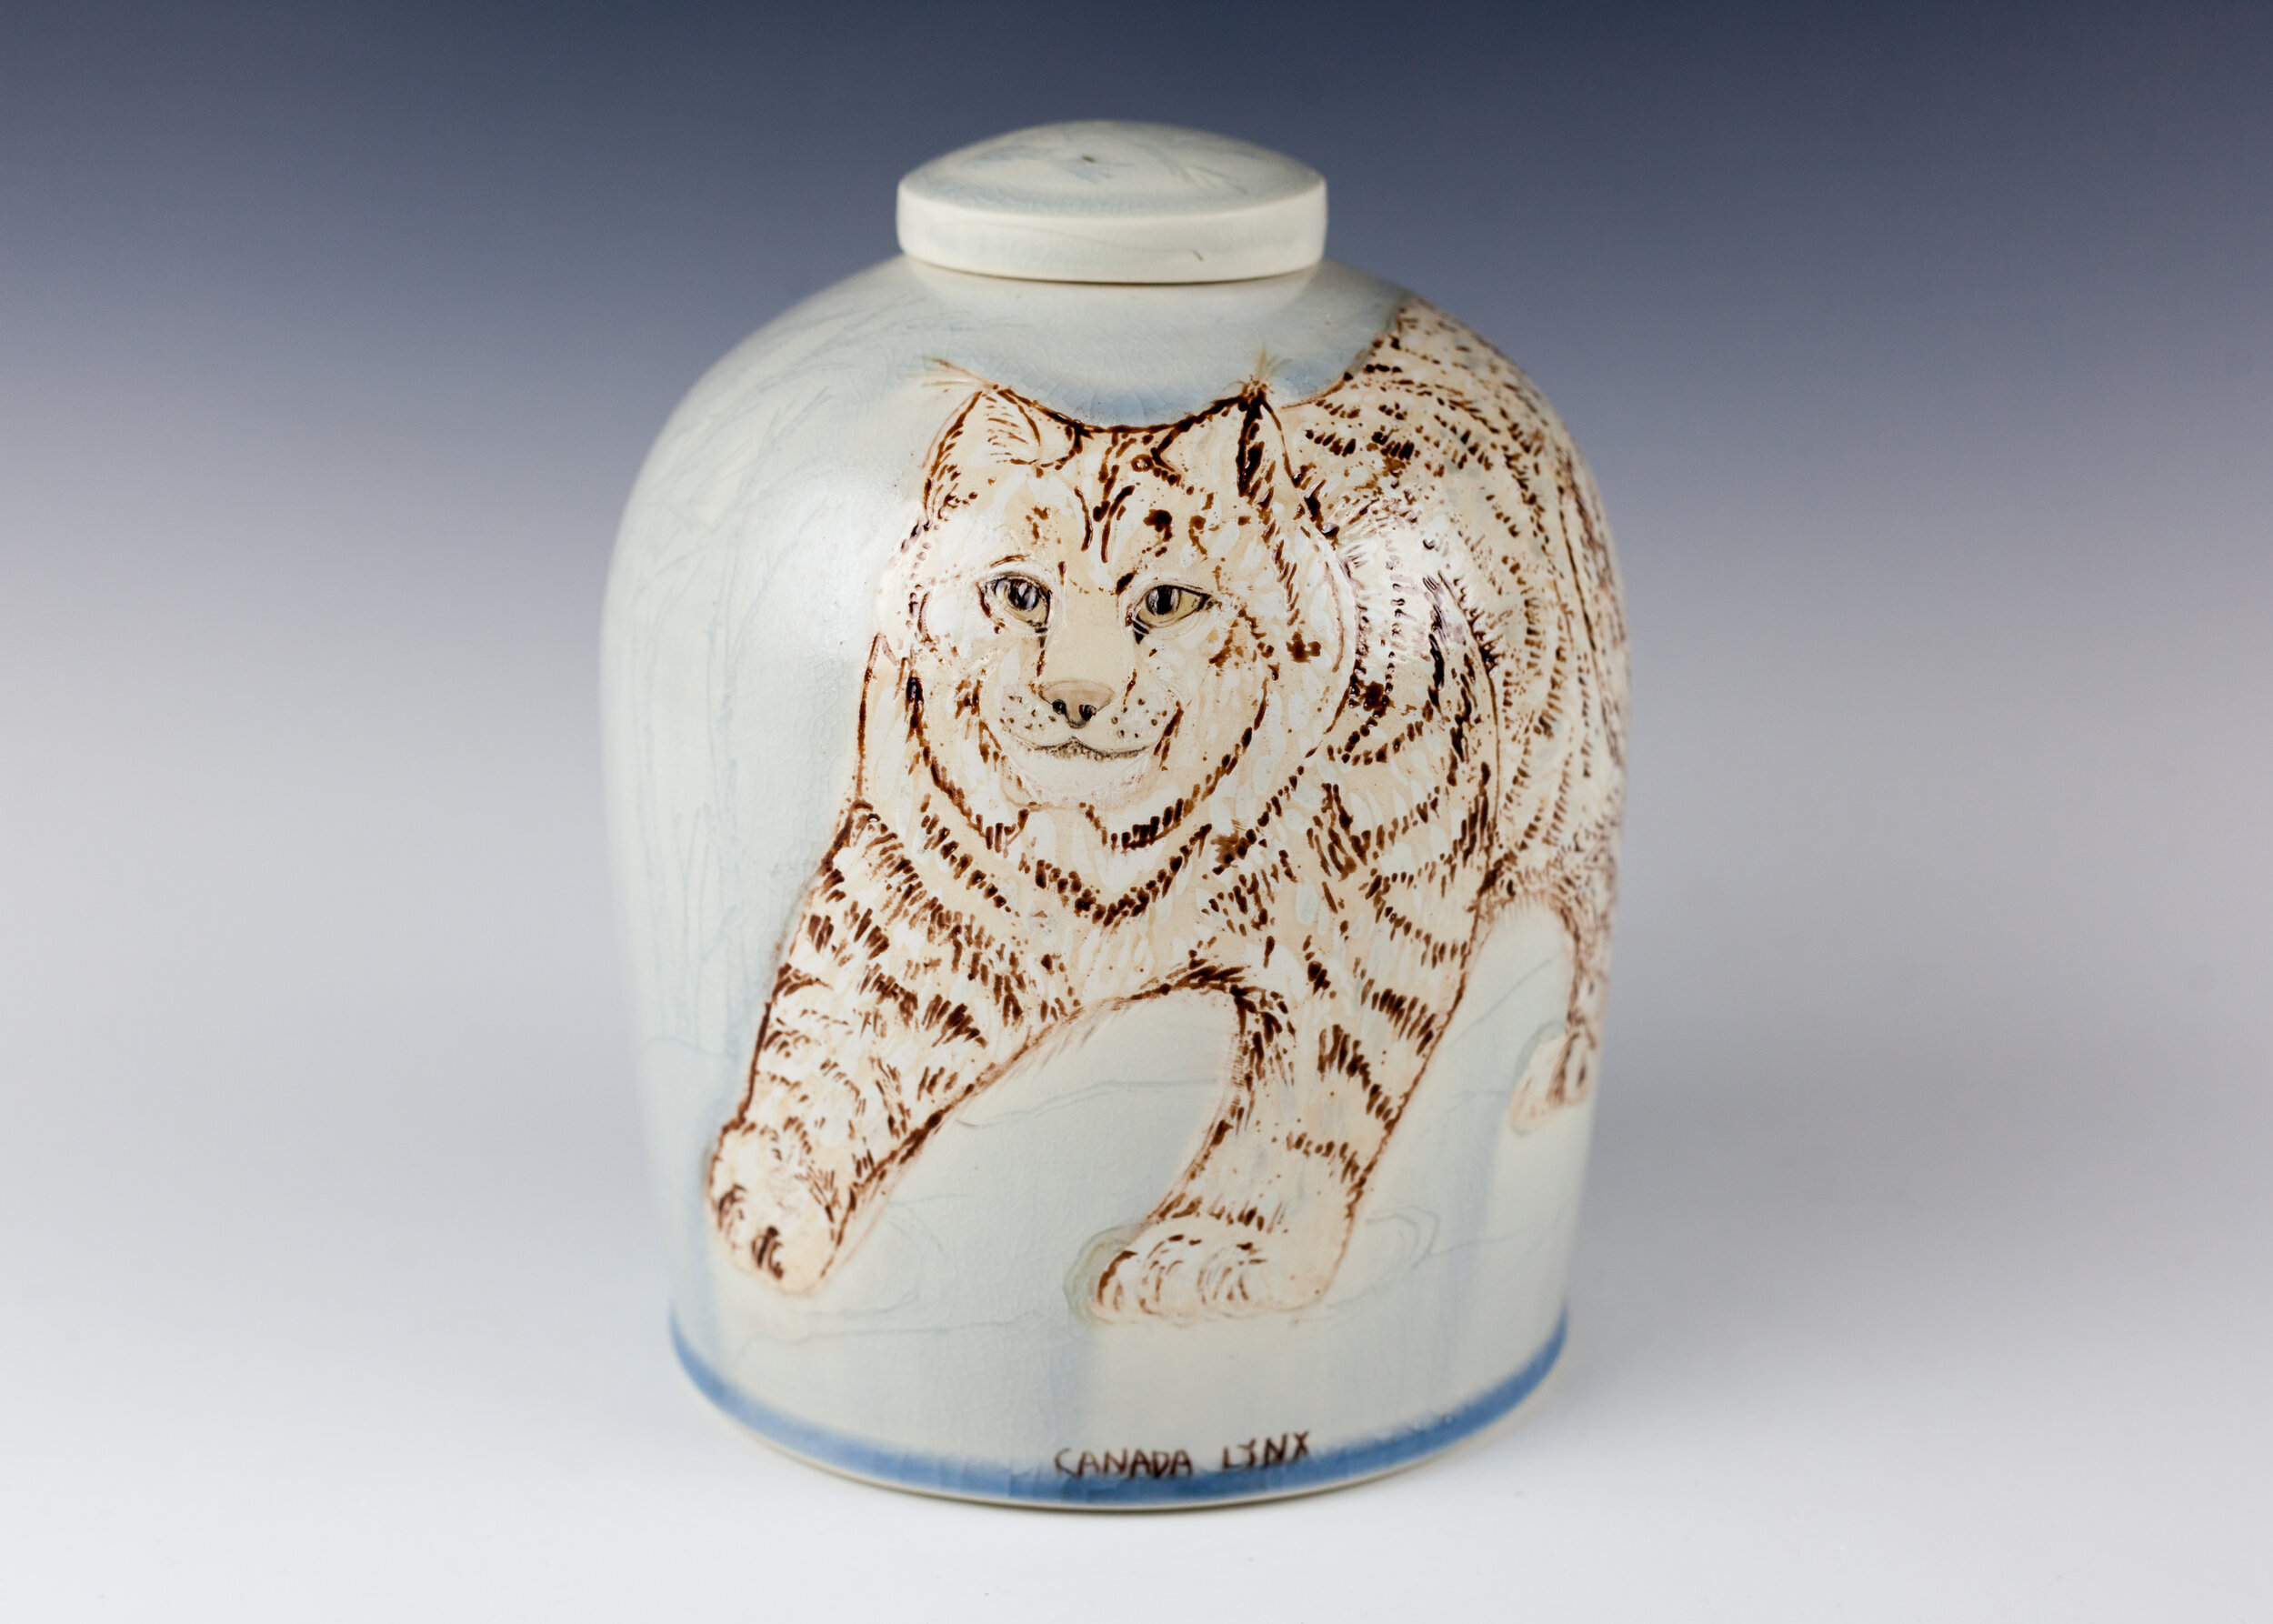 Clay Art Center Julia Galloway - Canada Lynx.jpg